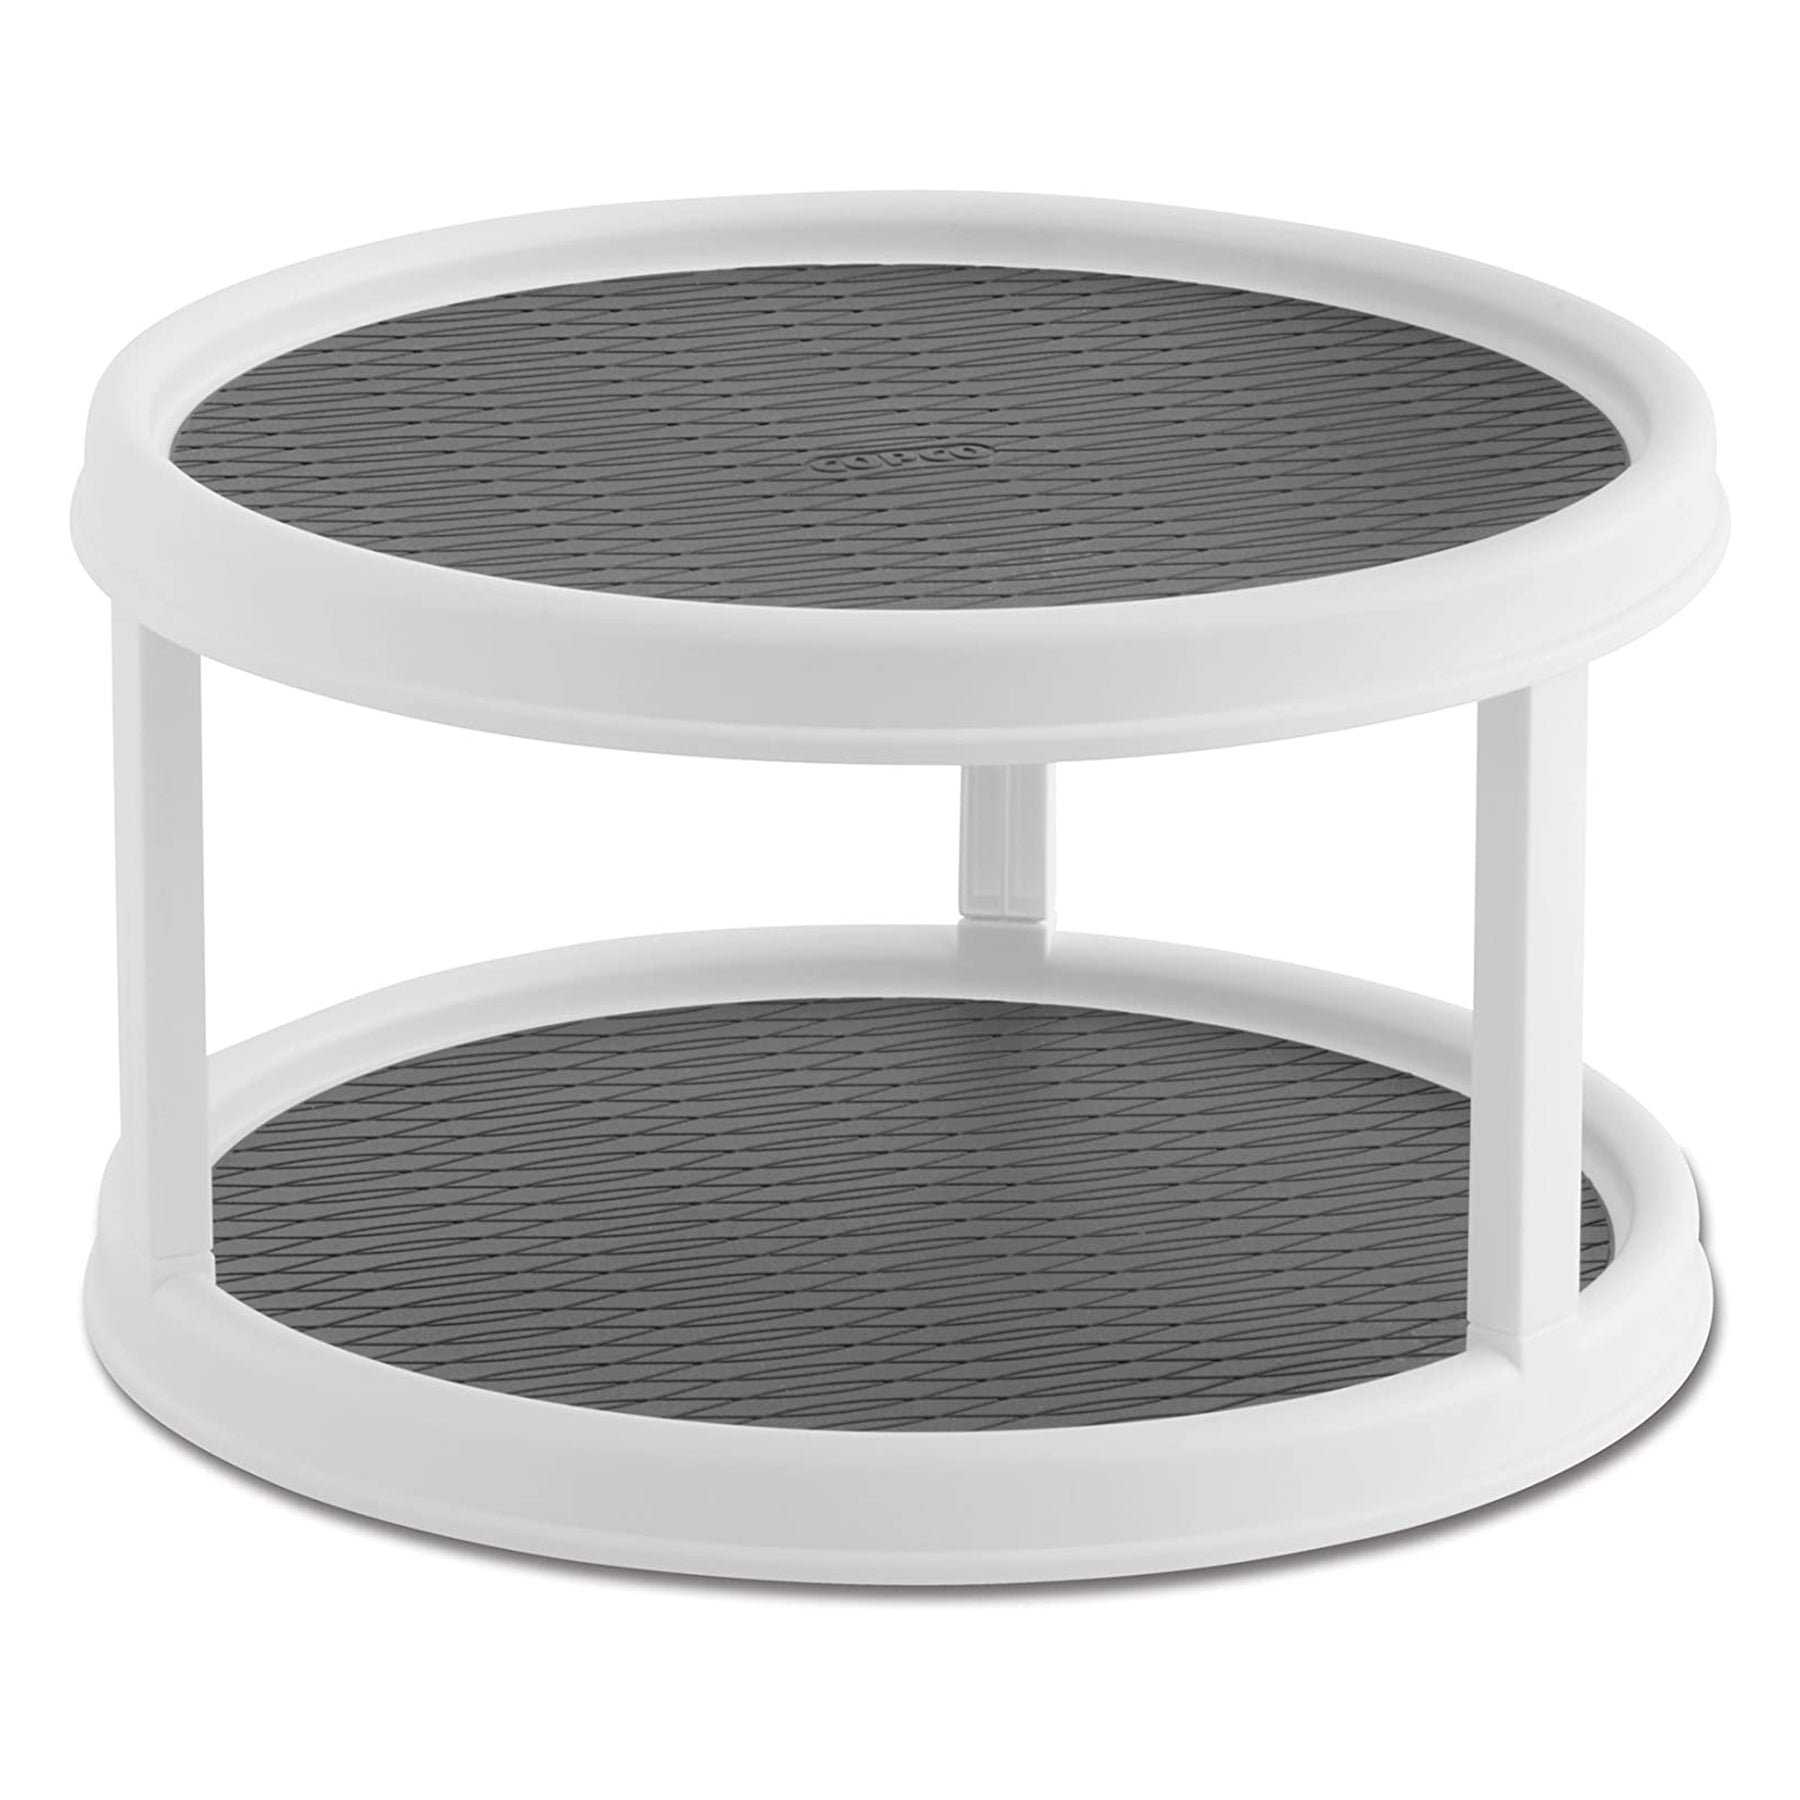 2-Tier round storage rack - White & Grey Color